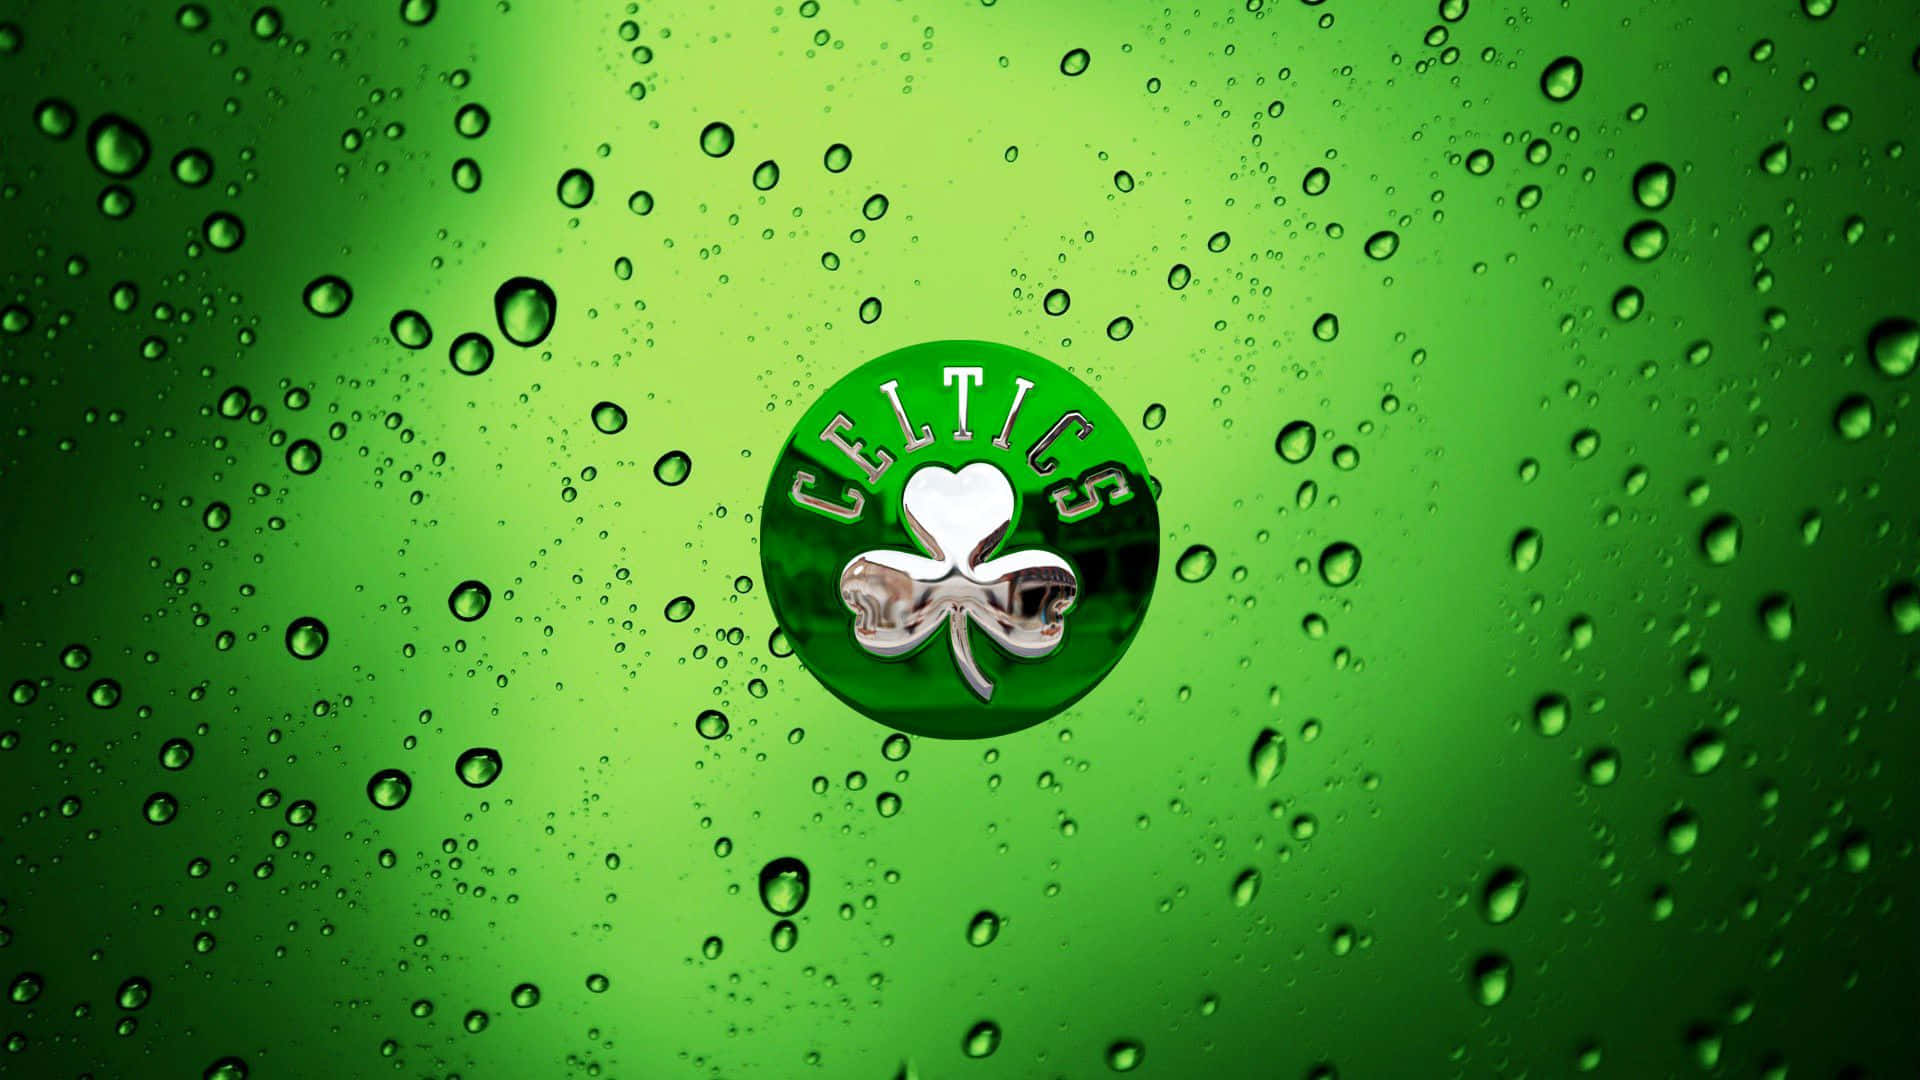 Celtics Logo Water Droplets Wallpaper